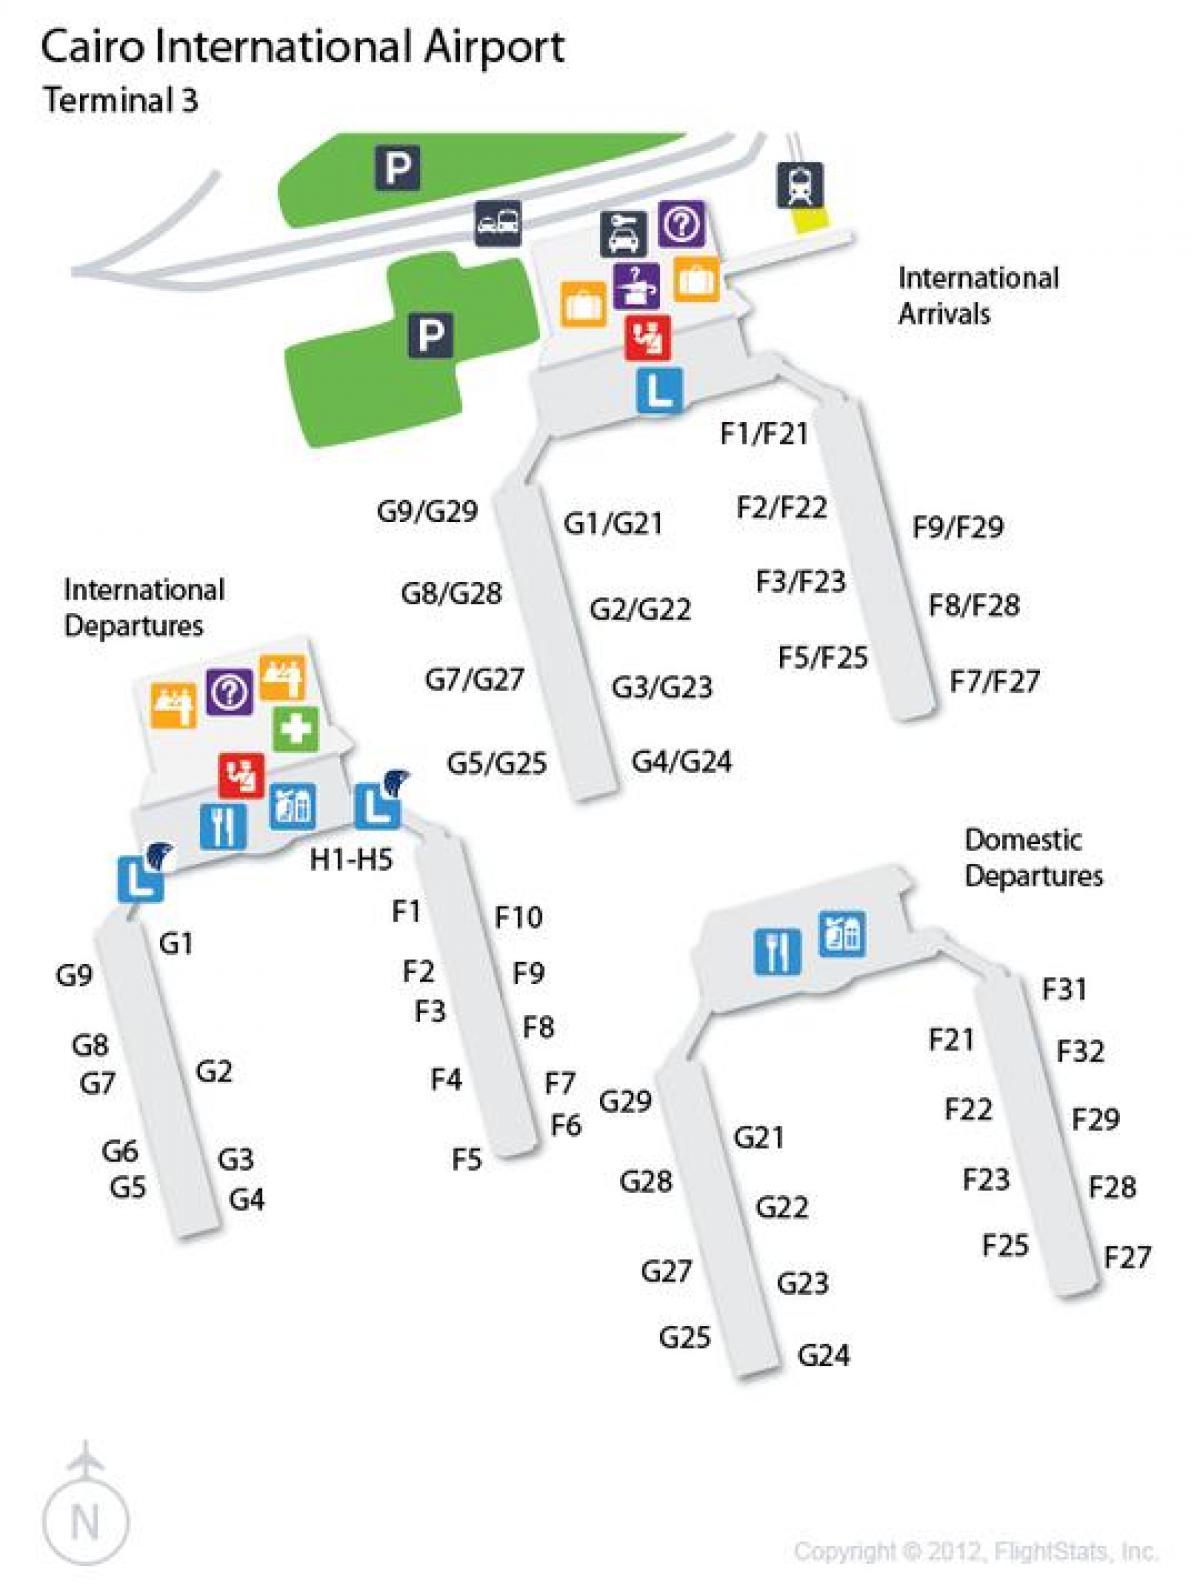 Kart over kairo lufthavn terminal